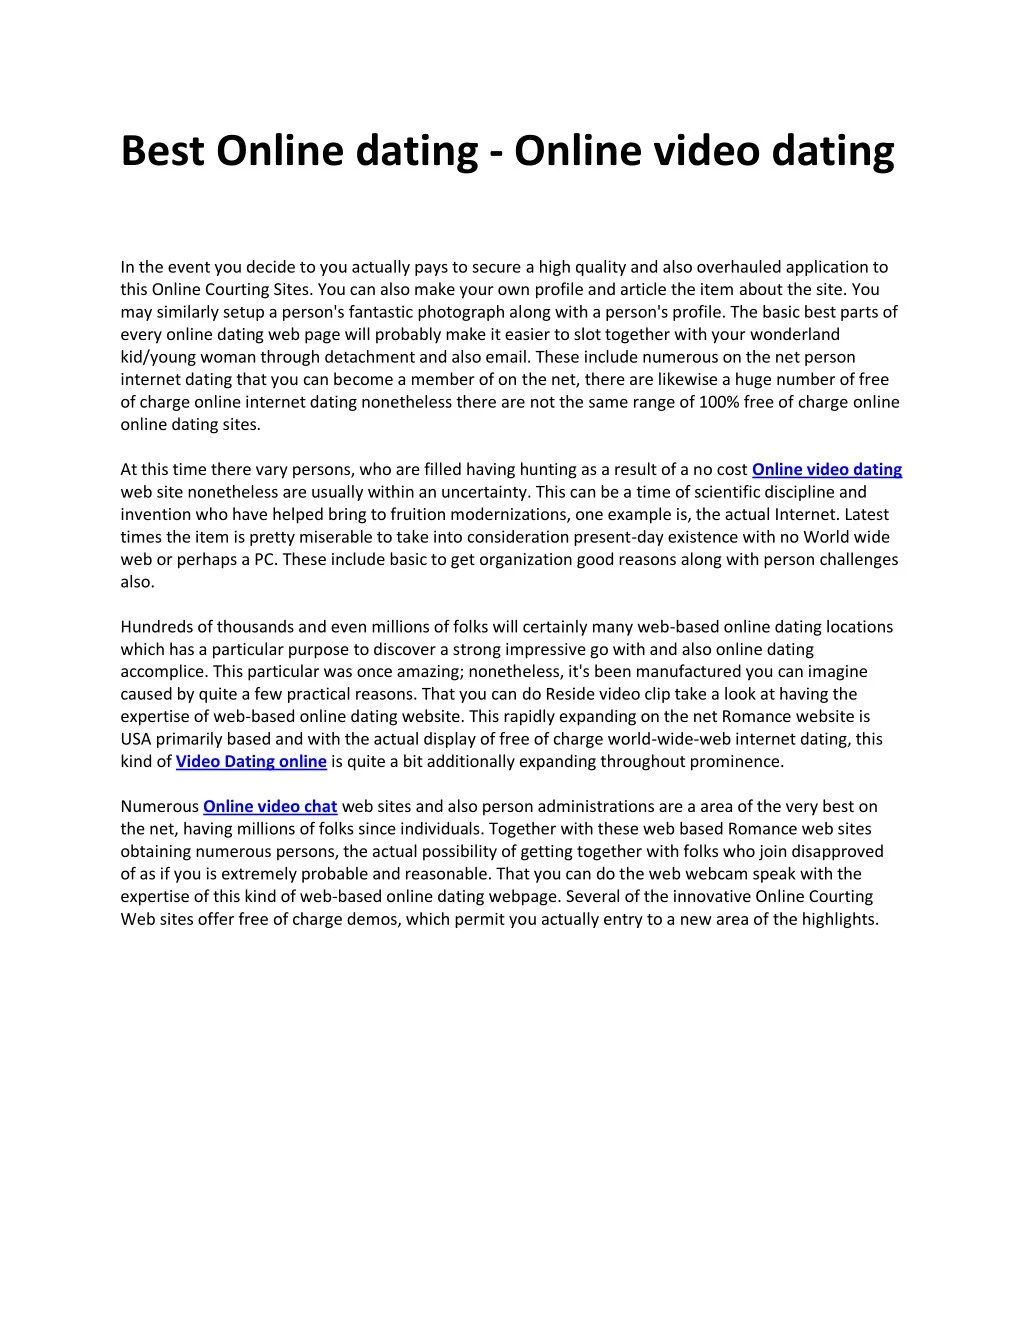 best online dating online video dating